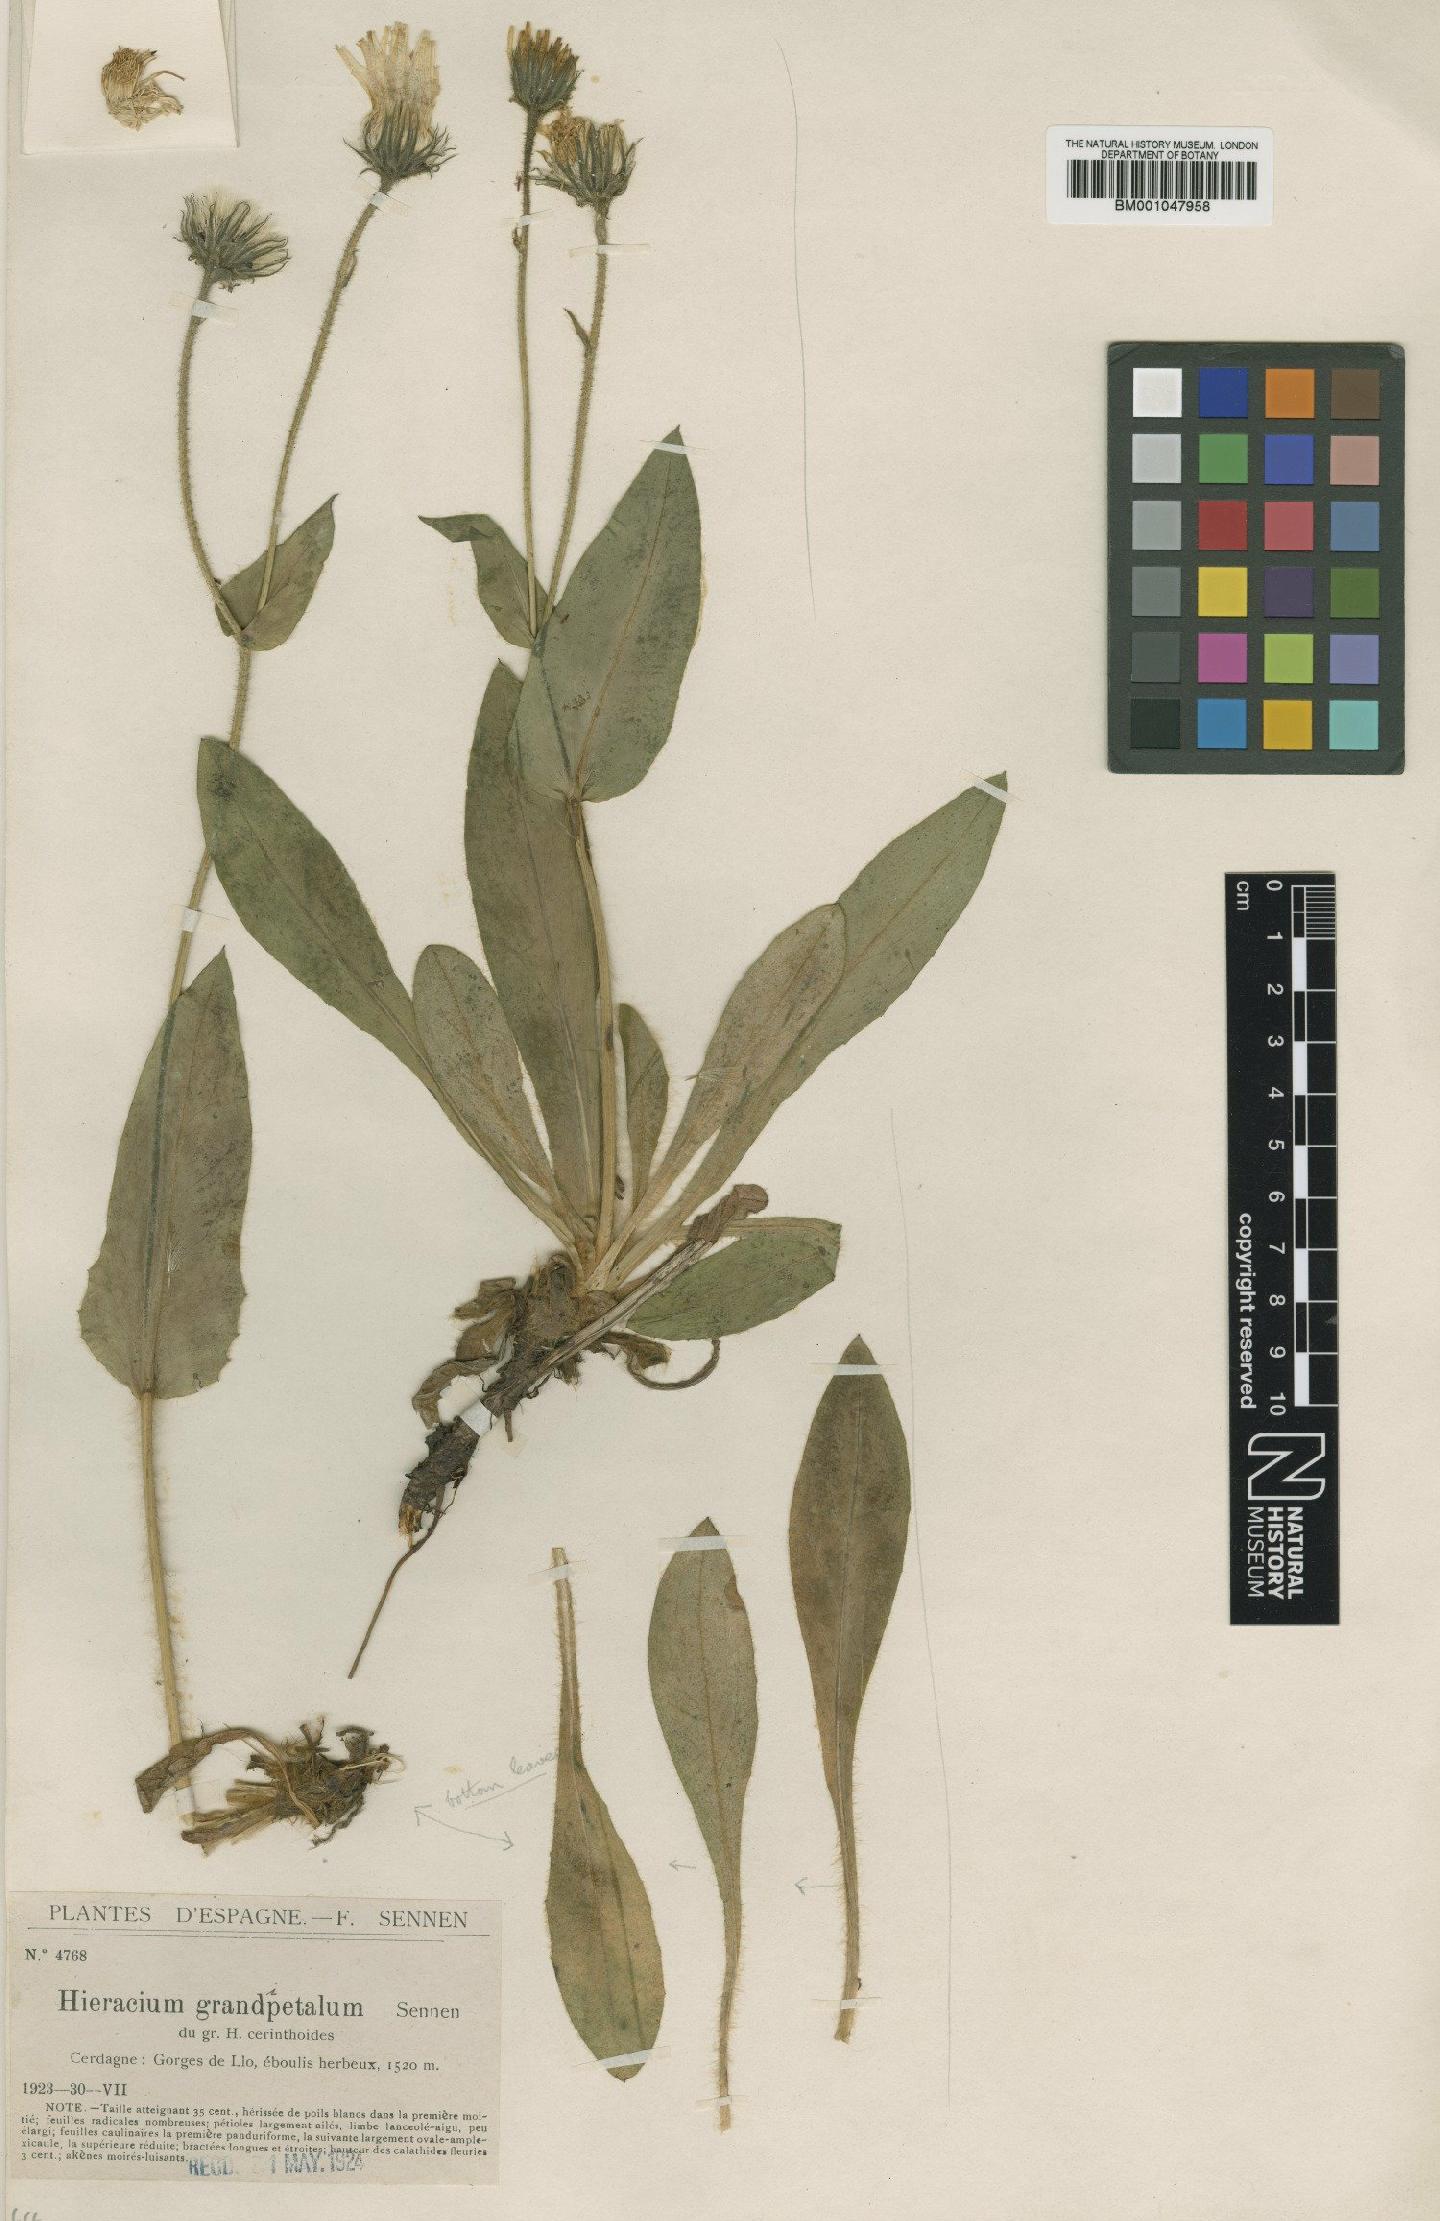 To NHMUK collection (Hieracium grandipetalum Sennen; Type; NHMUK:ecatalogue:2820194)